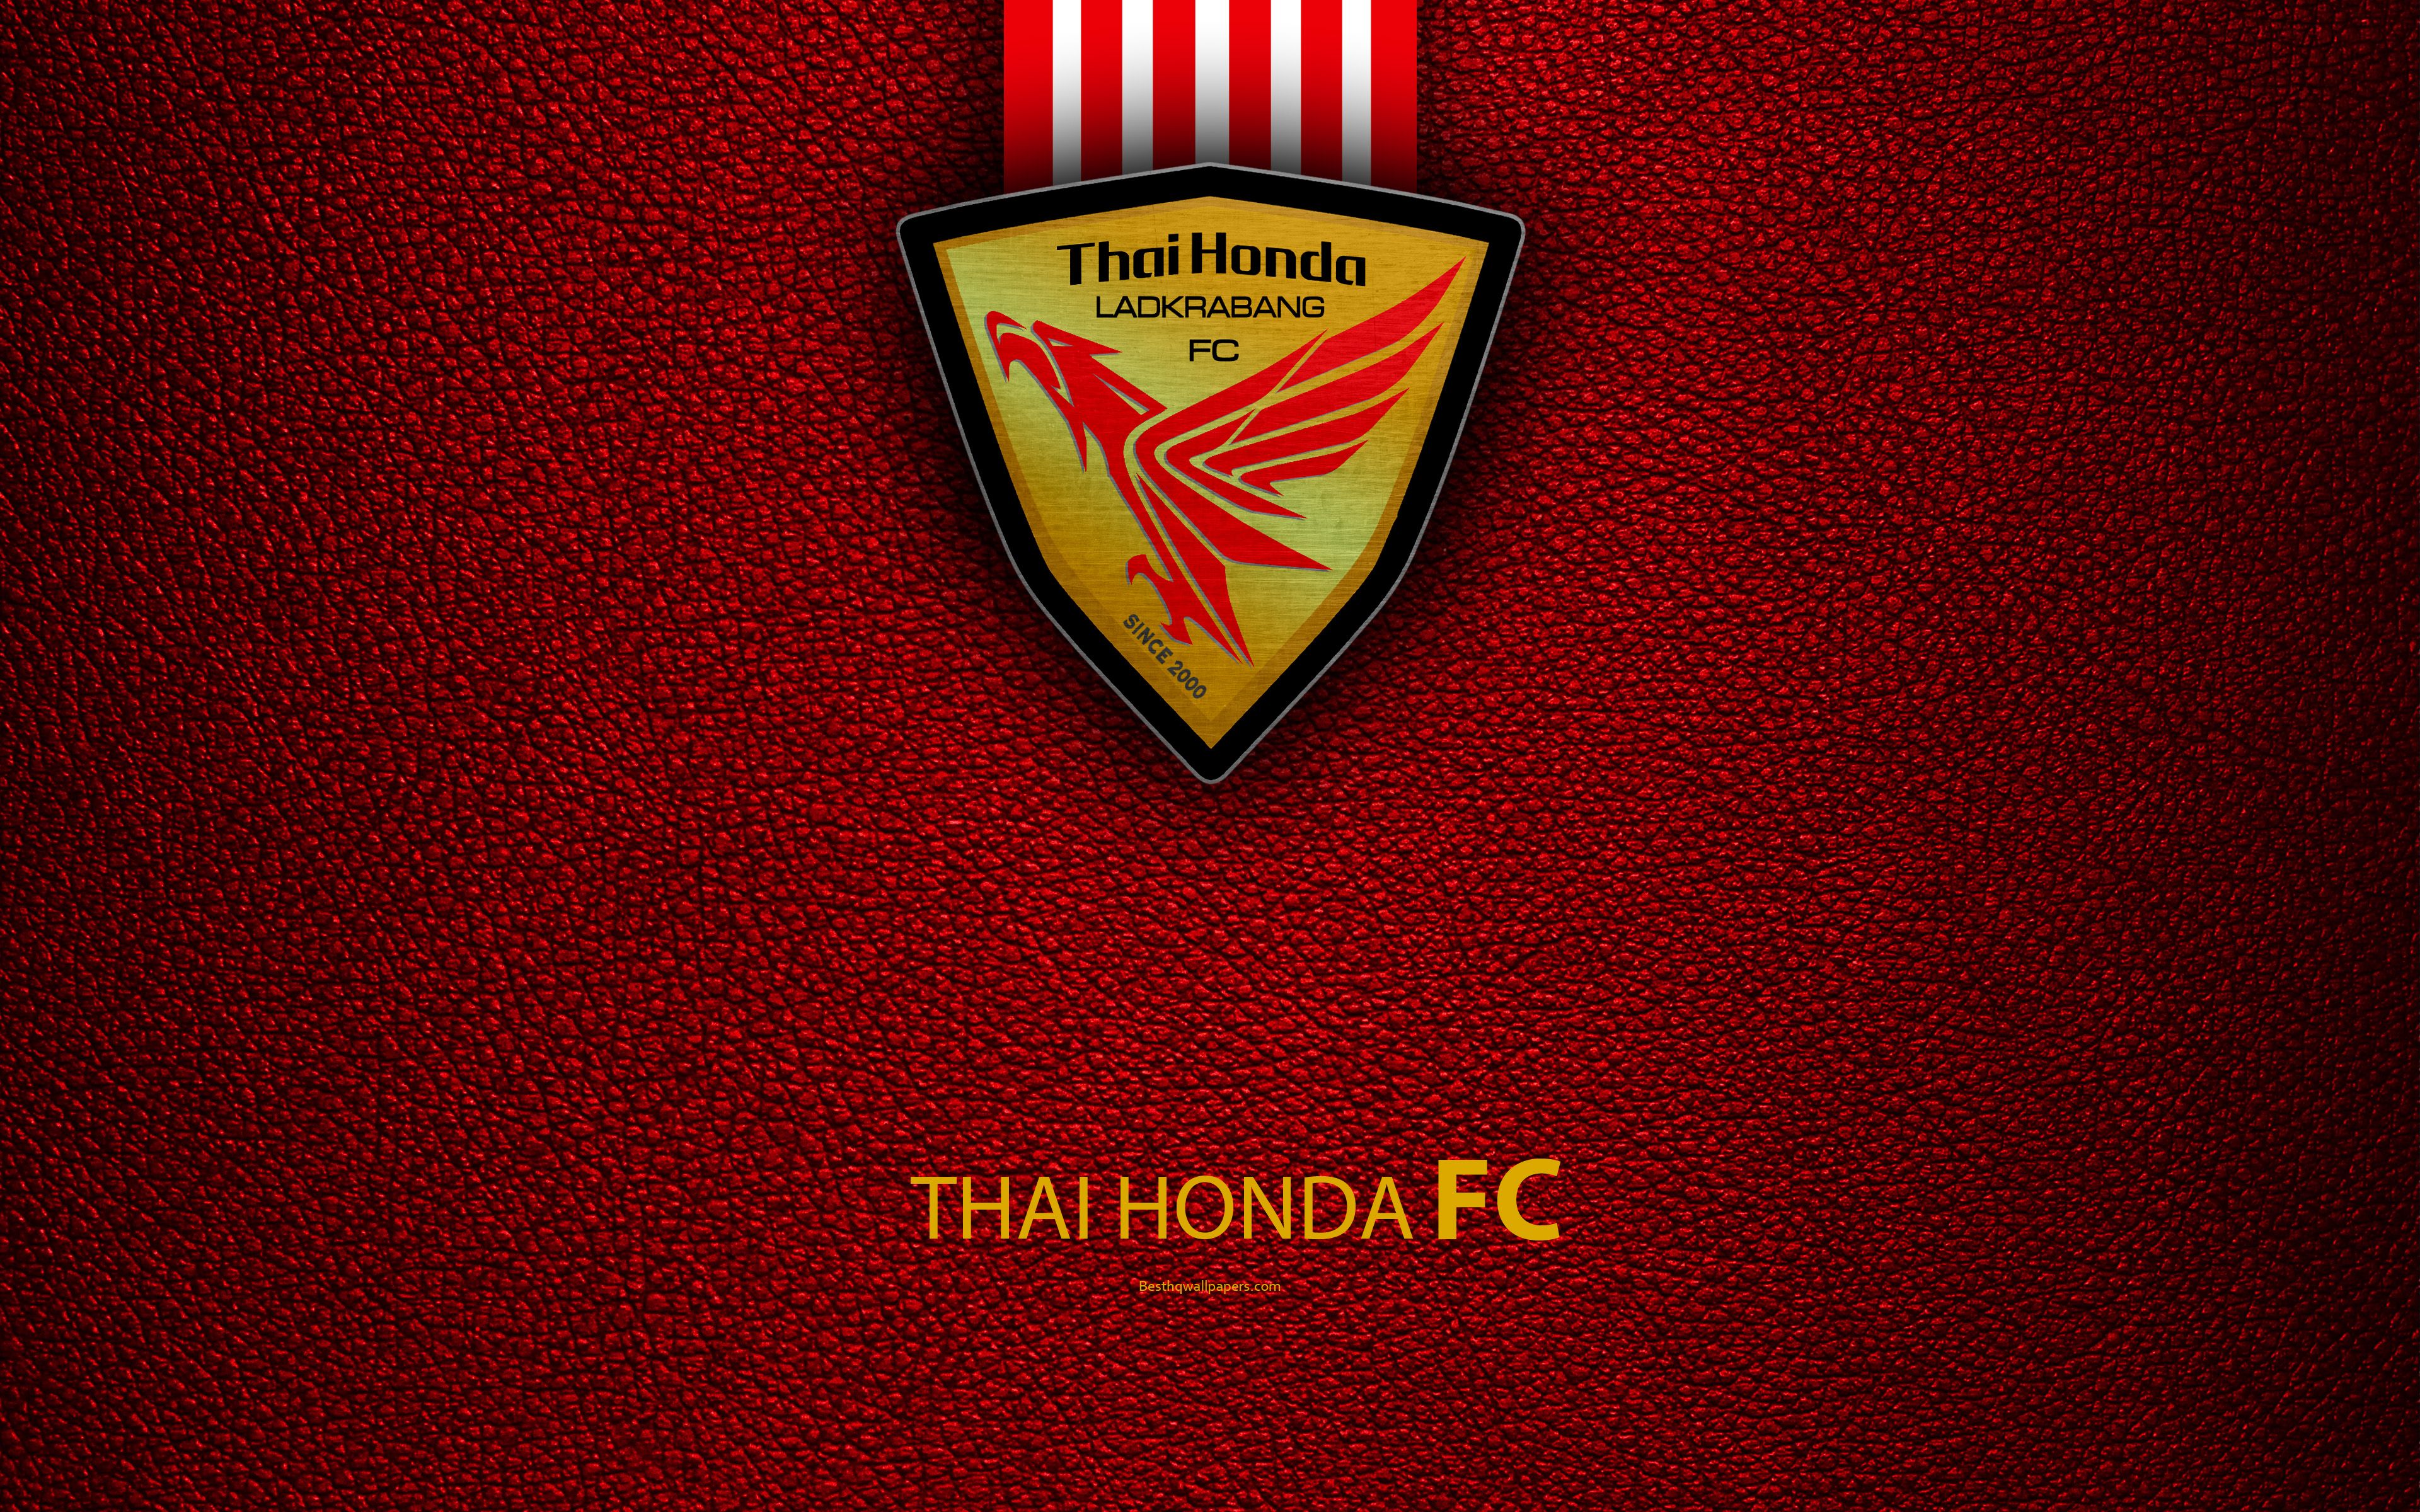 Download wallpaper Thai Honda FC, 4K, Thai Football Club, logo